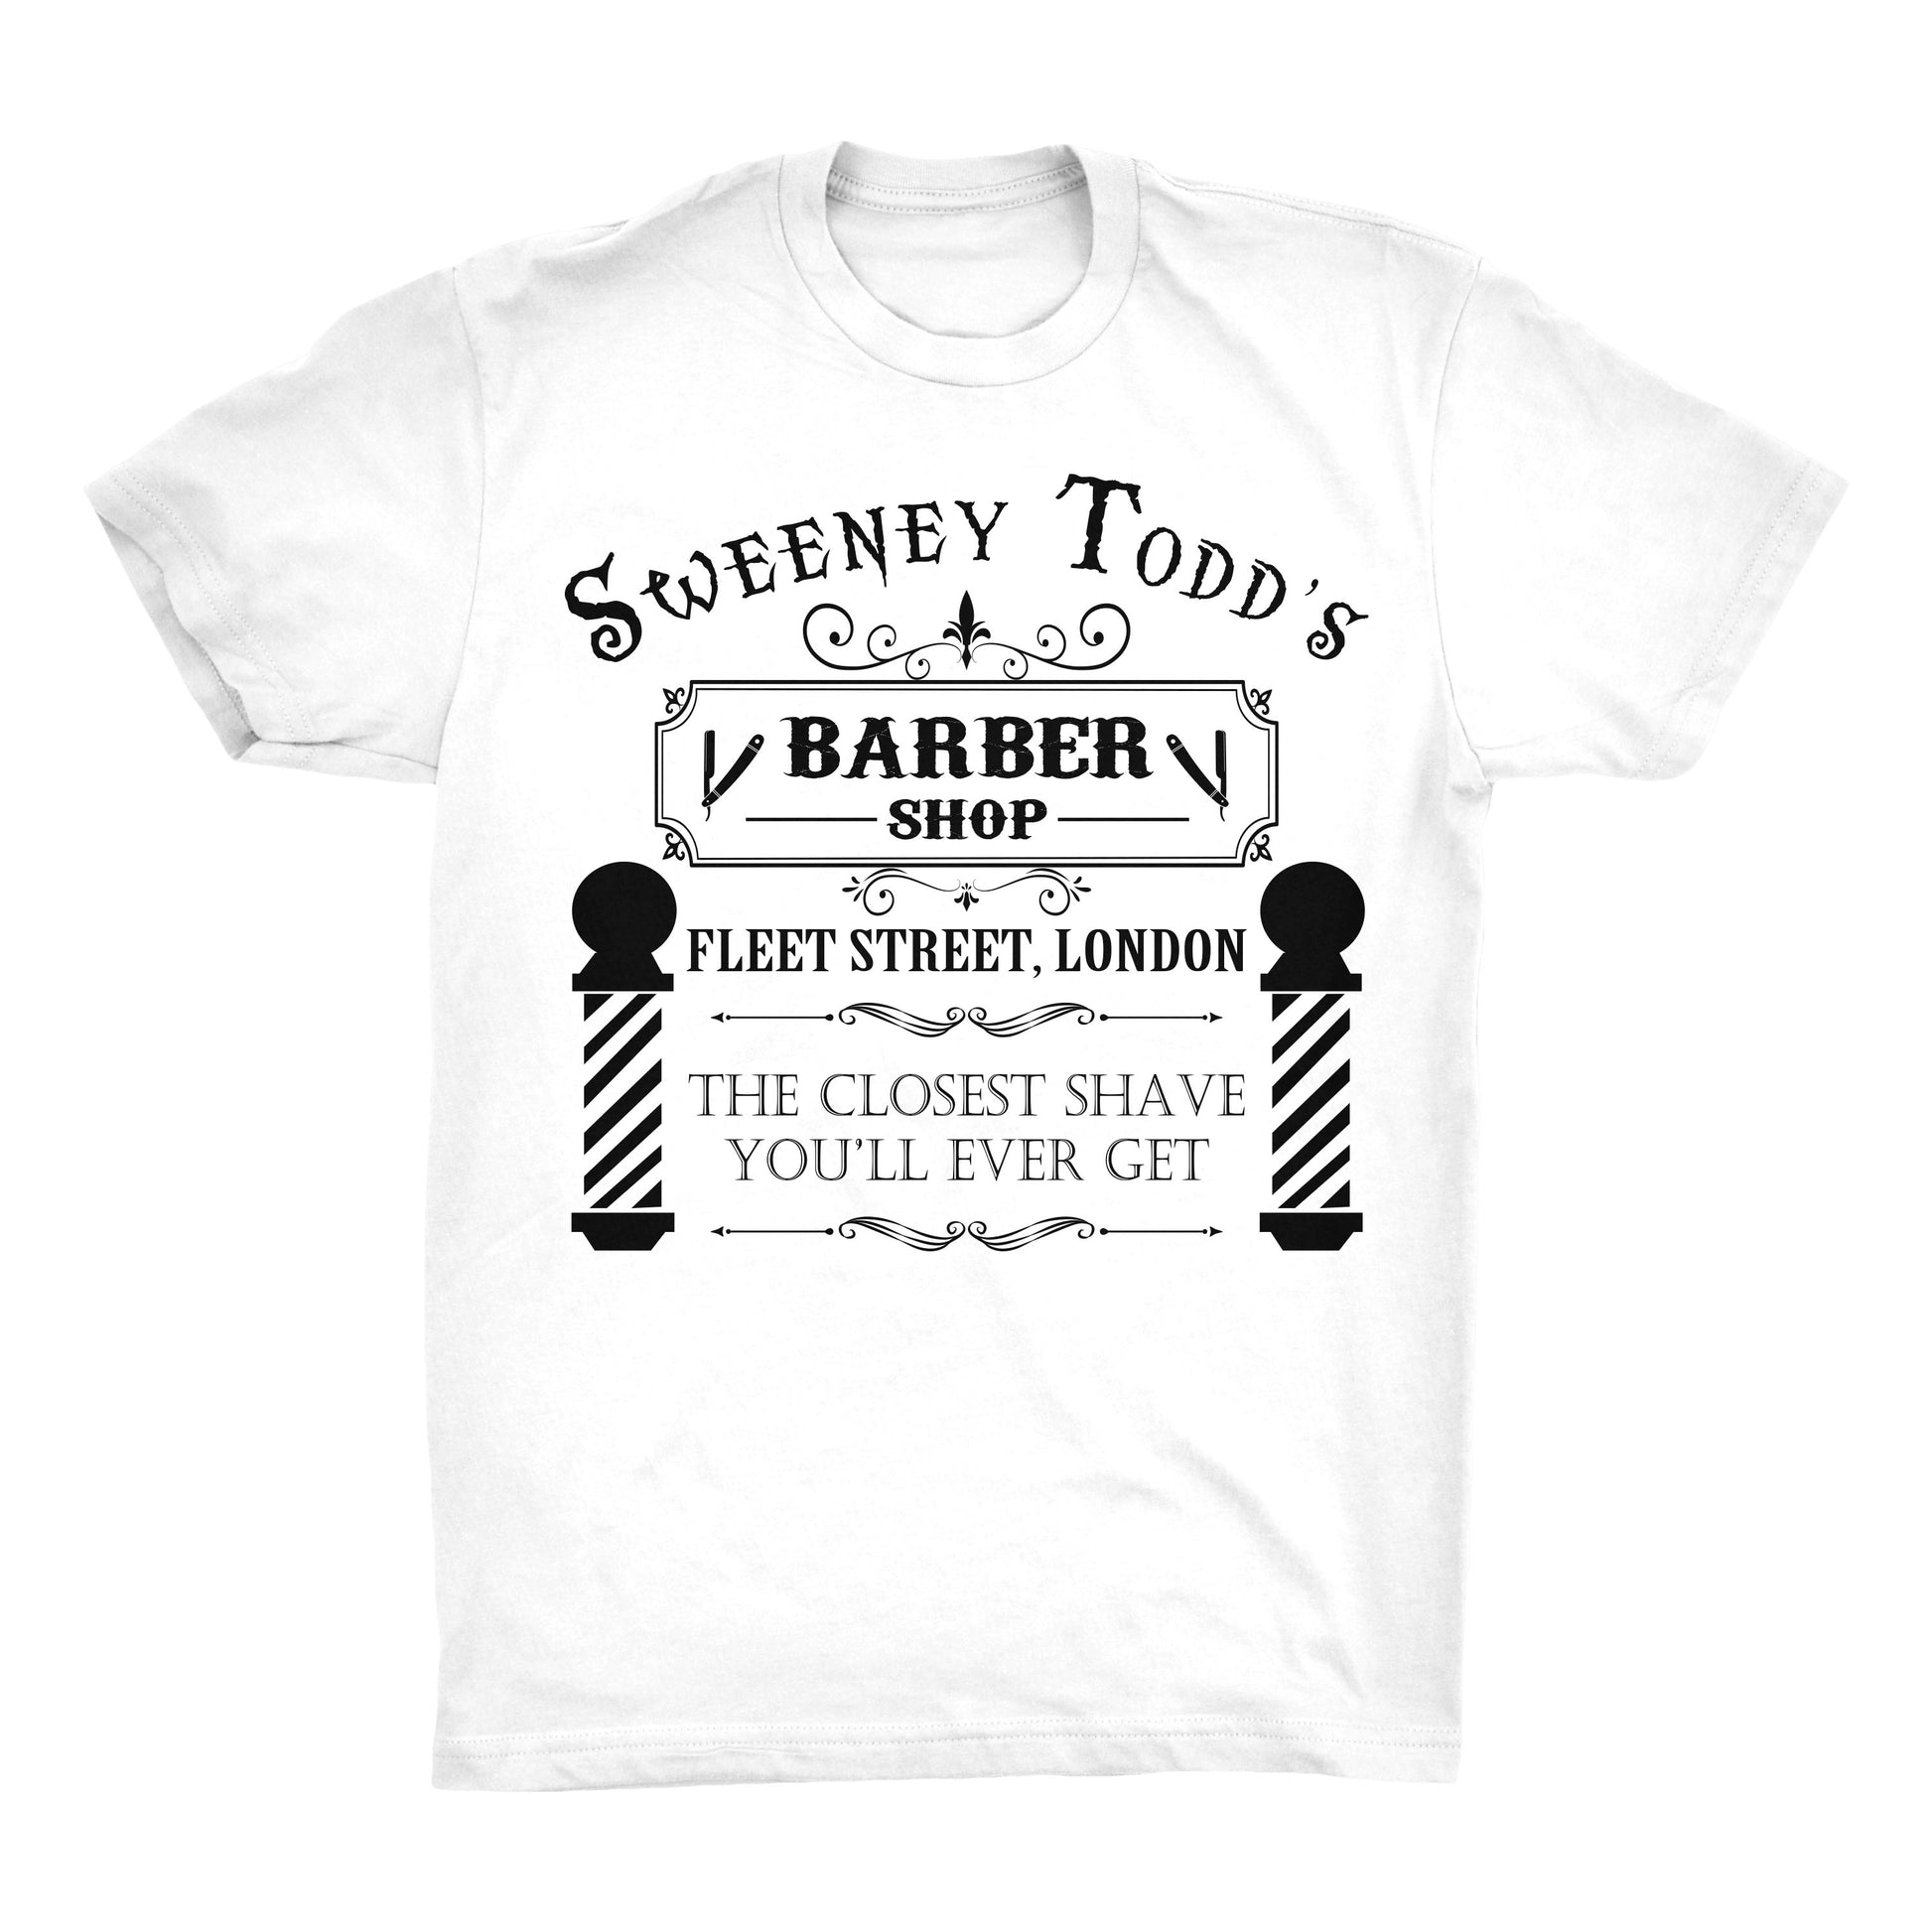 Sweeney Todd's 100% Soft Premium Cotton T-Shirt